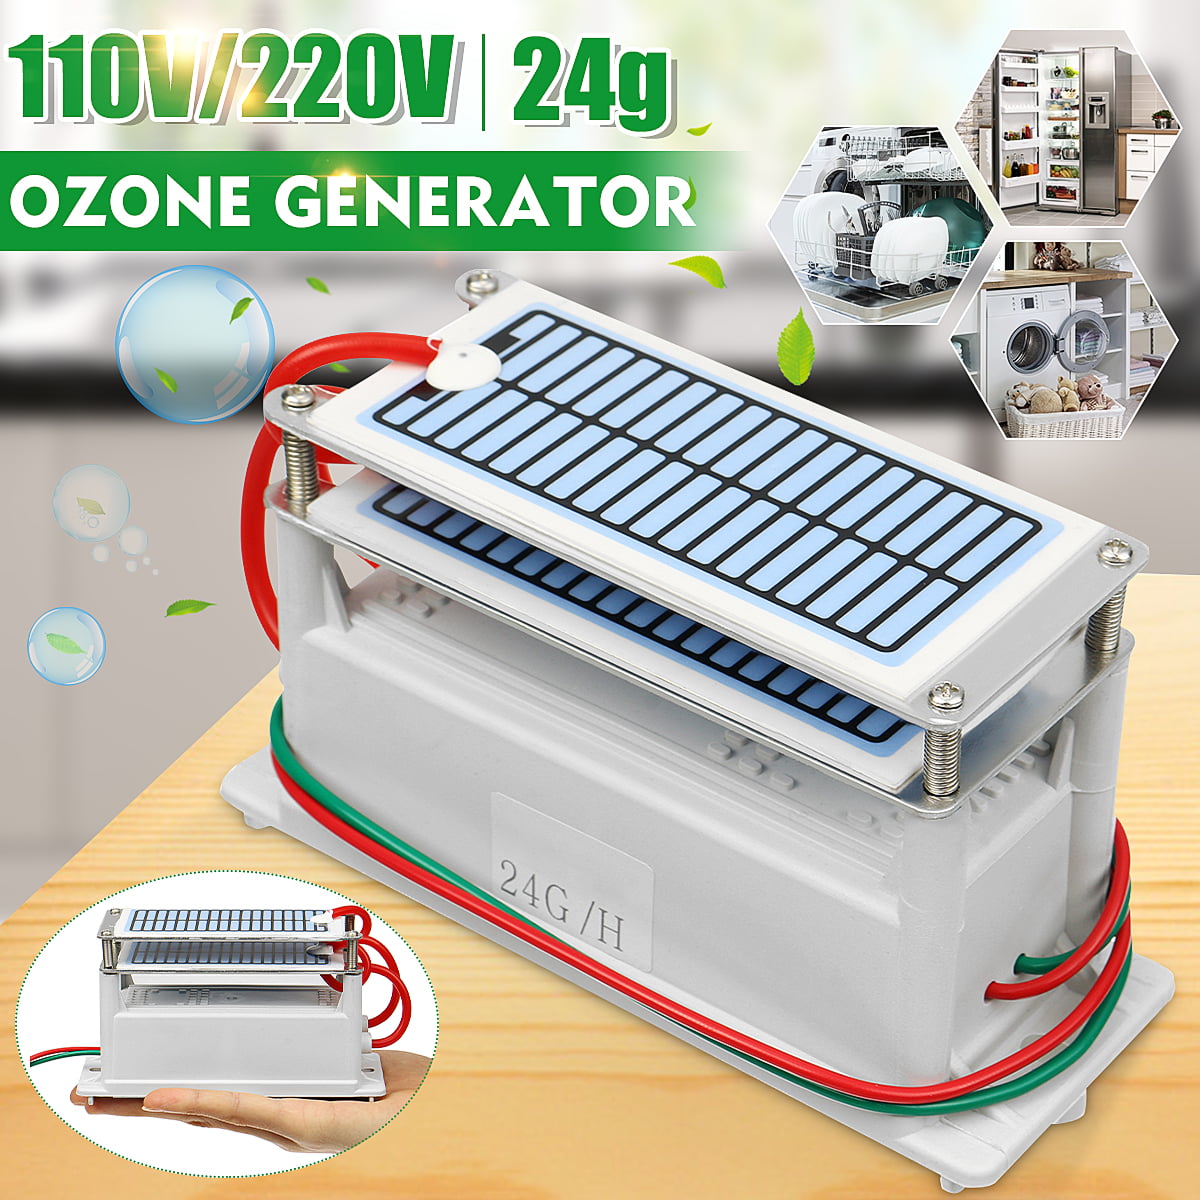 Ozone Treatment Generator 24g/h 220V Portable Ozonizer Air and Water Sterilizer 